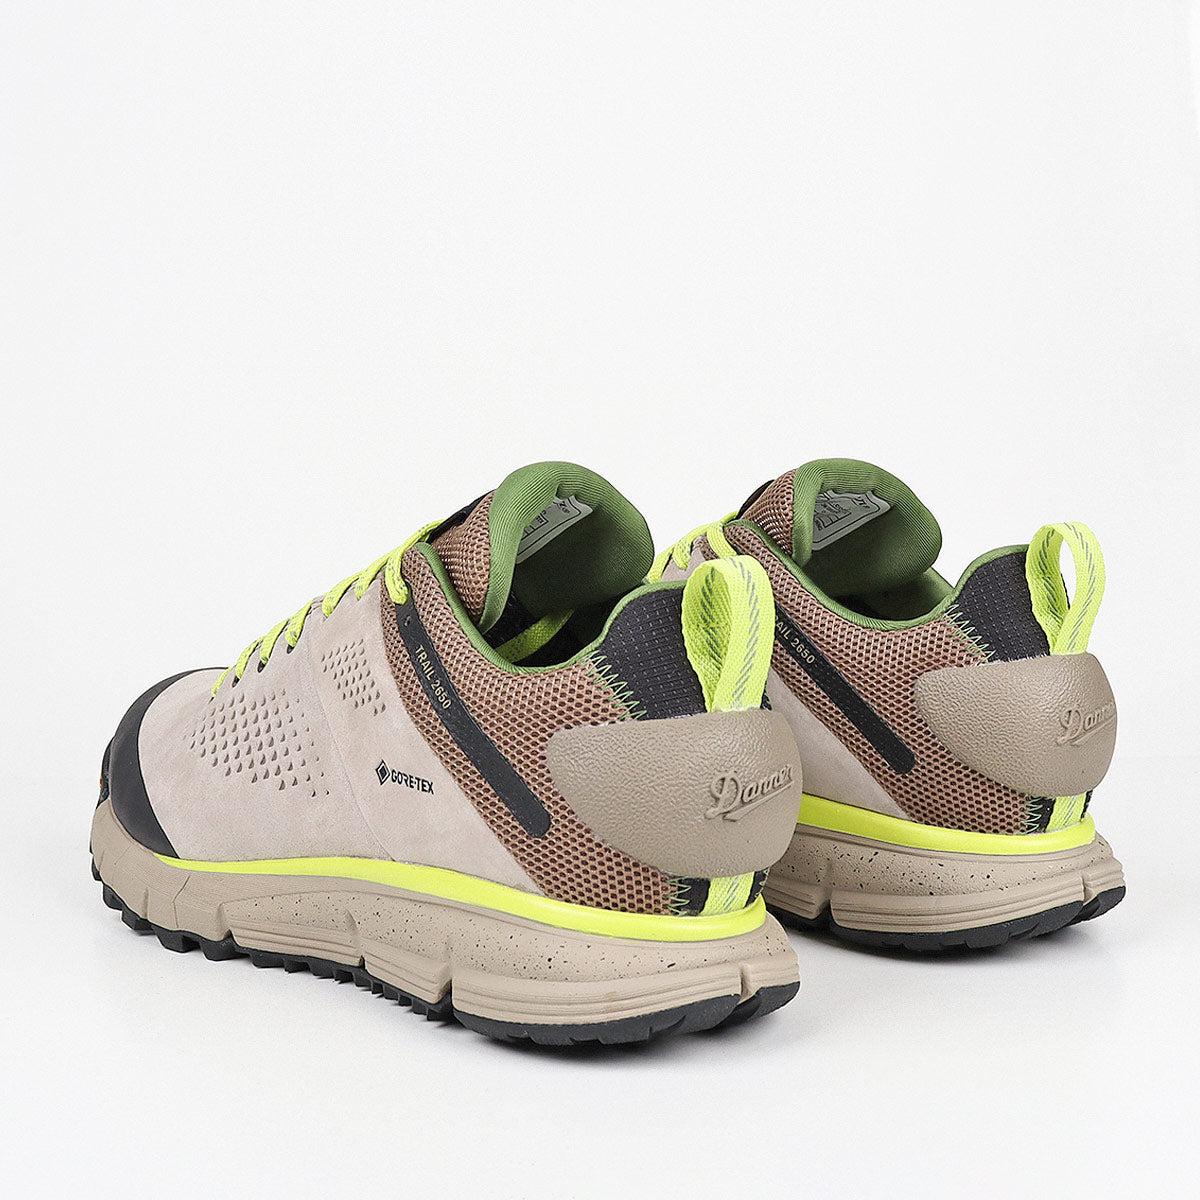 Danner Trail 2650 3" GTX Shoes - D Standard Fit, Tan Meadow Greens GTX, Detail Shot 4